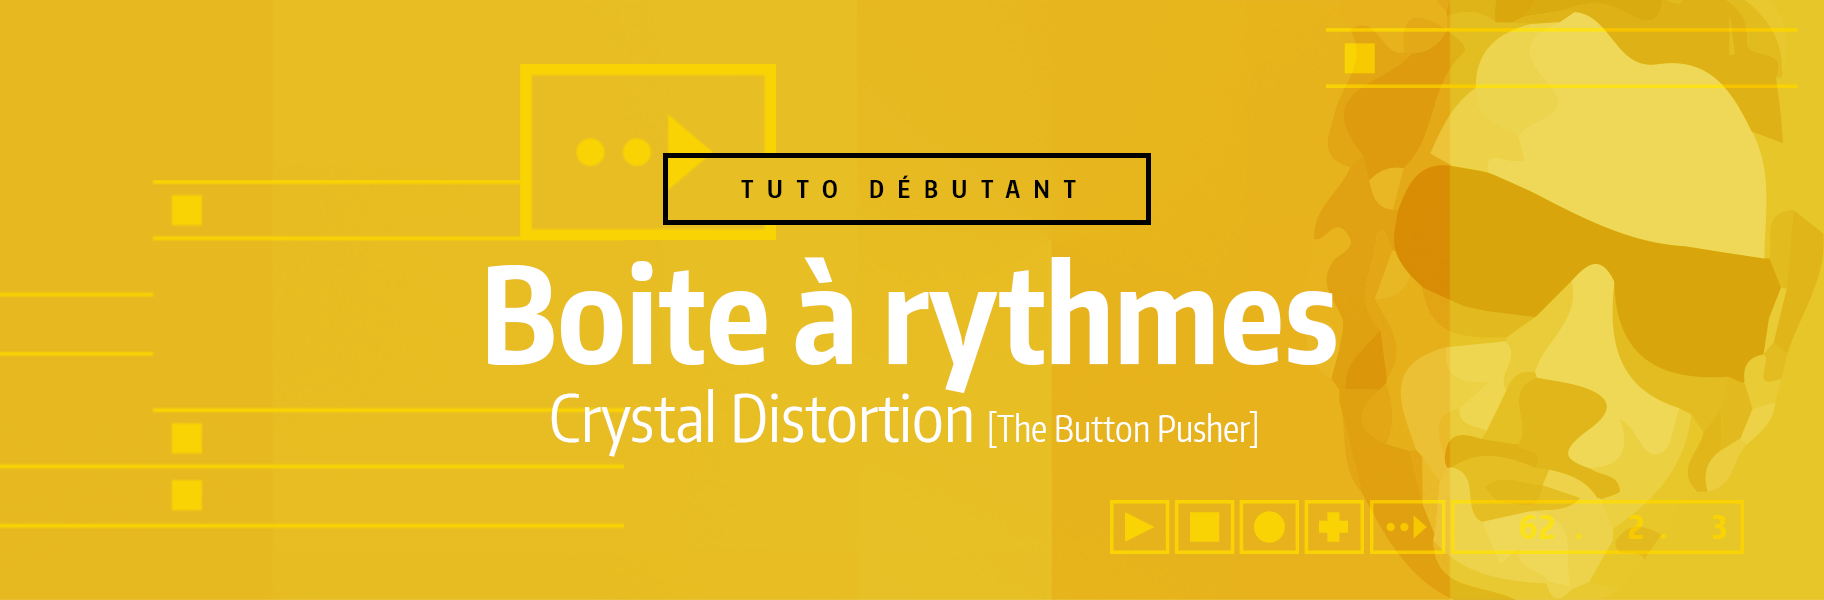 Tutoriel Ableton Live - Boite à rythmes Crystal Distortion (The Button Pusher)